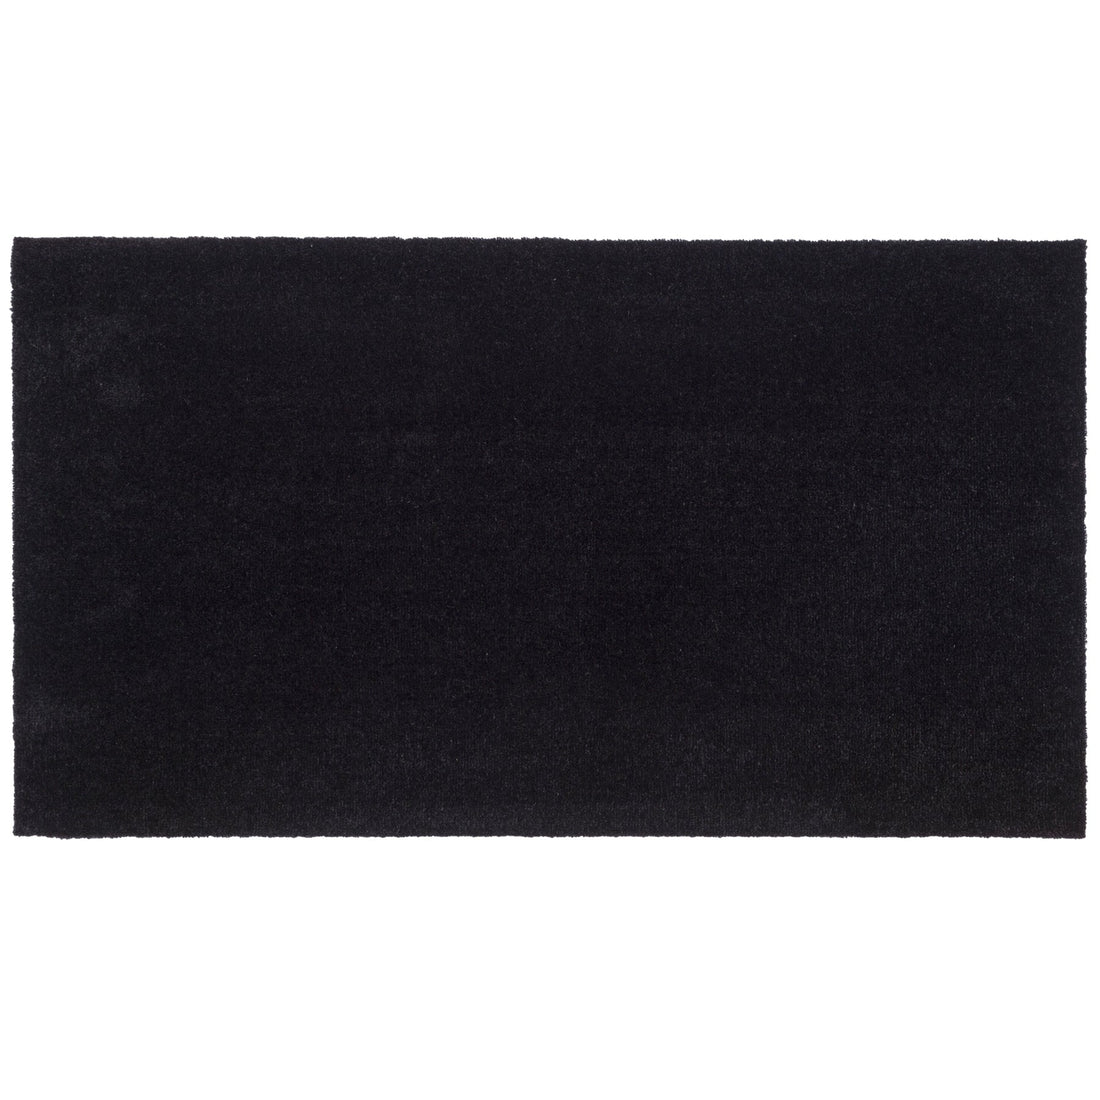 Floor mat 67 x 120 cm - Uni Color/Black